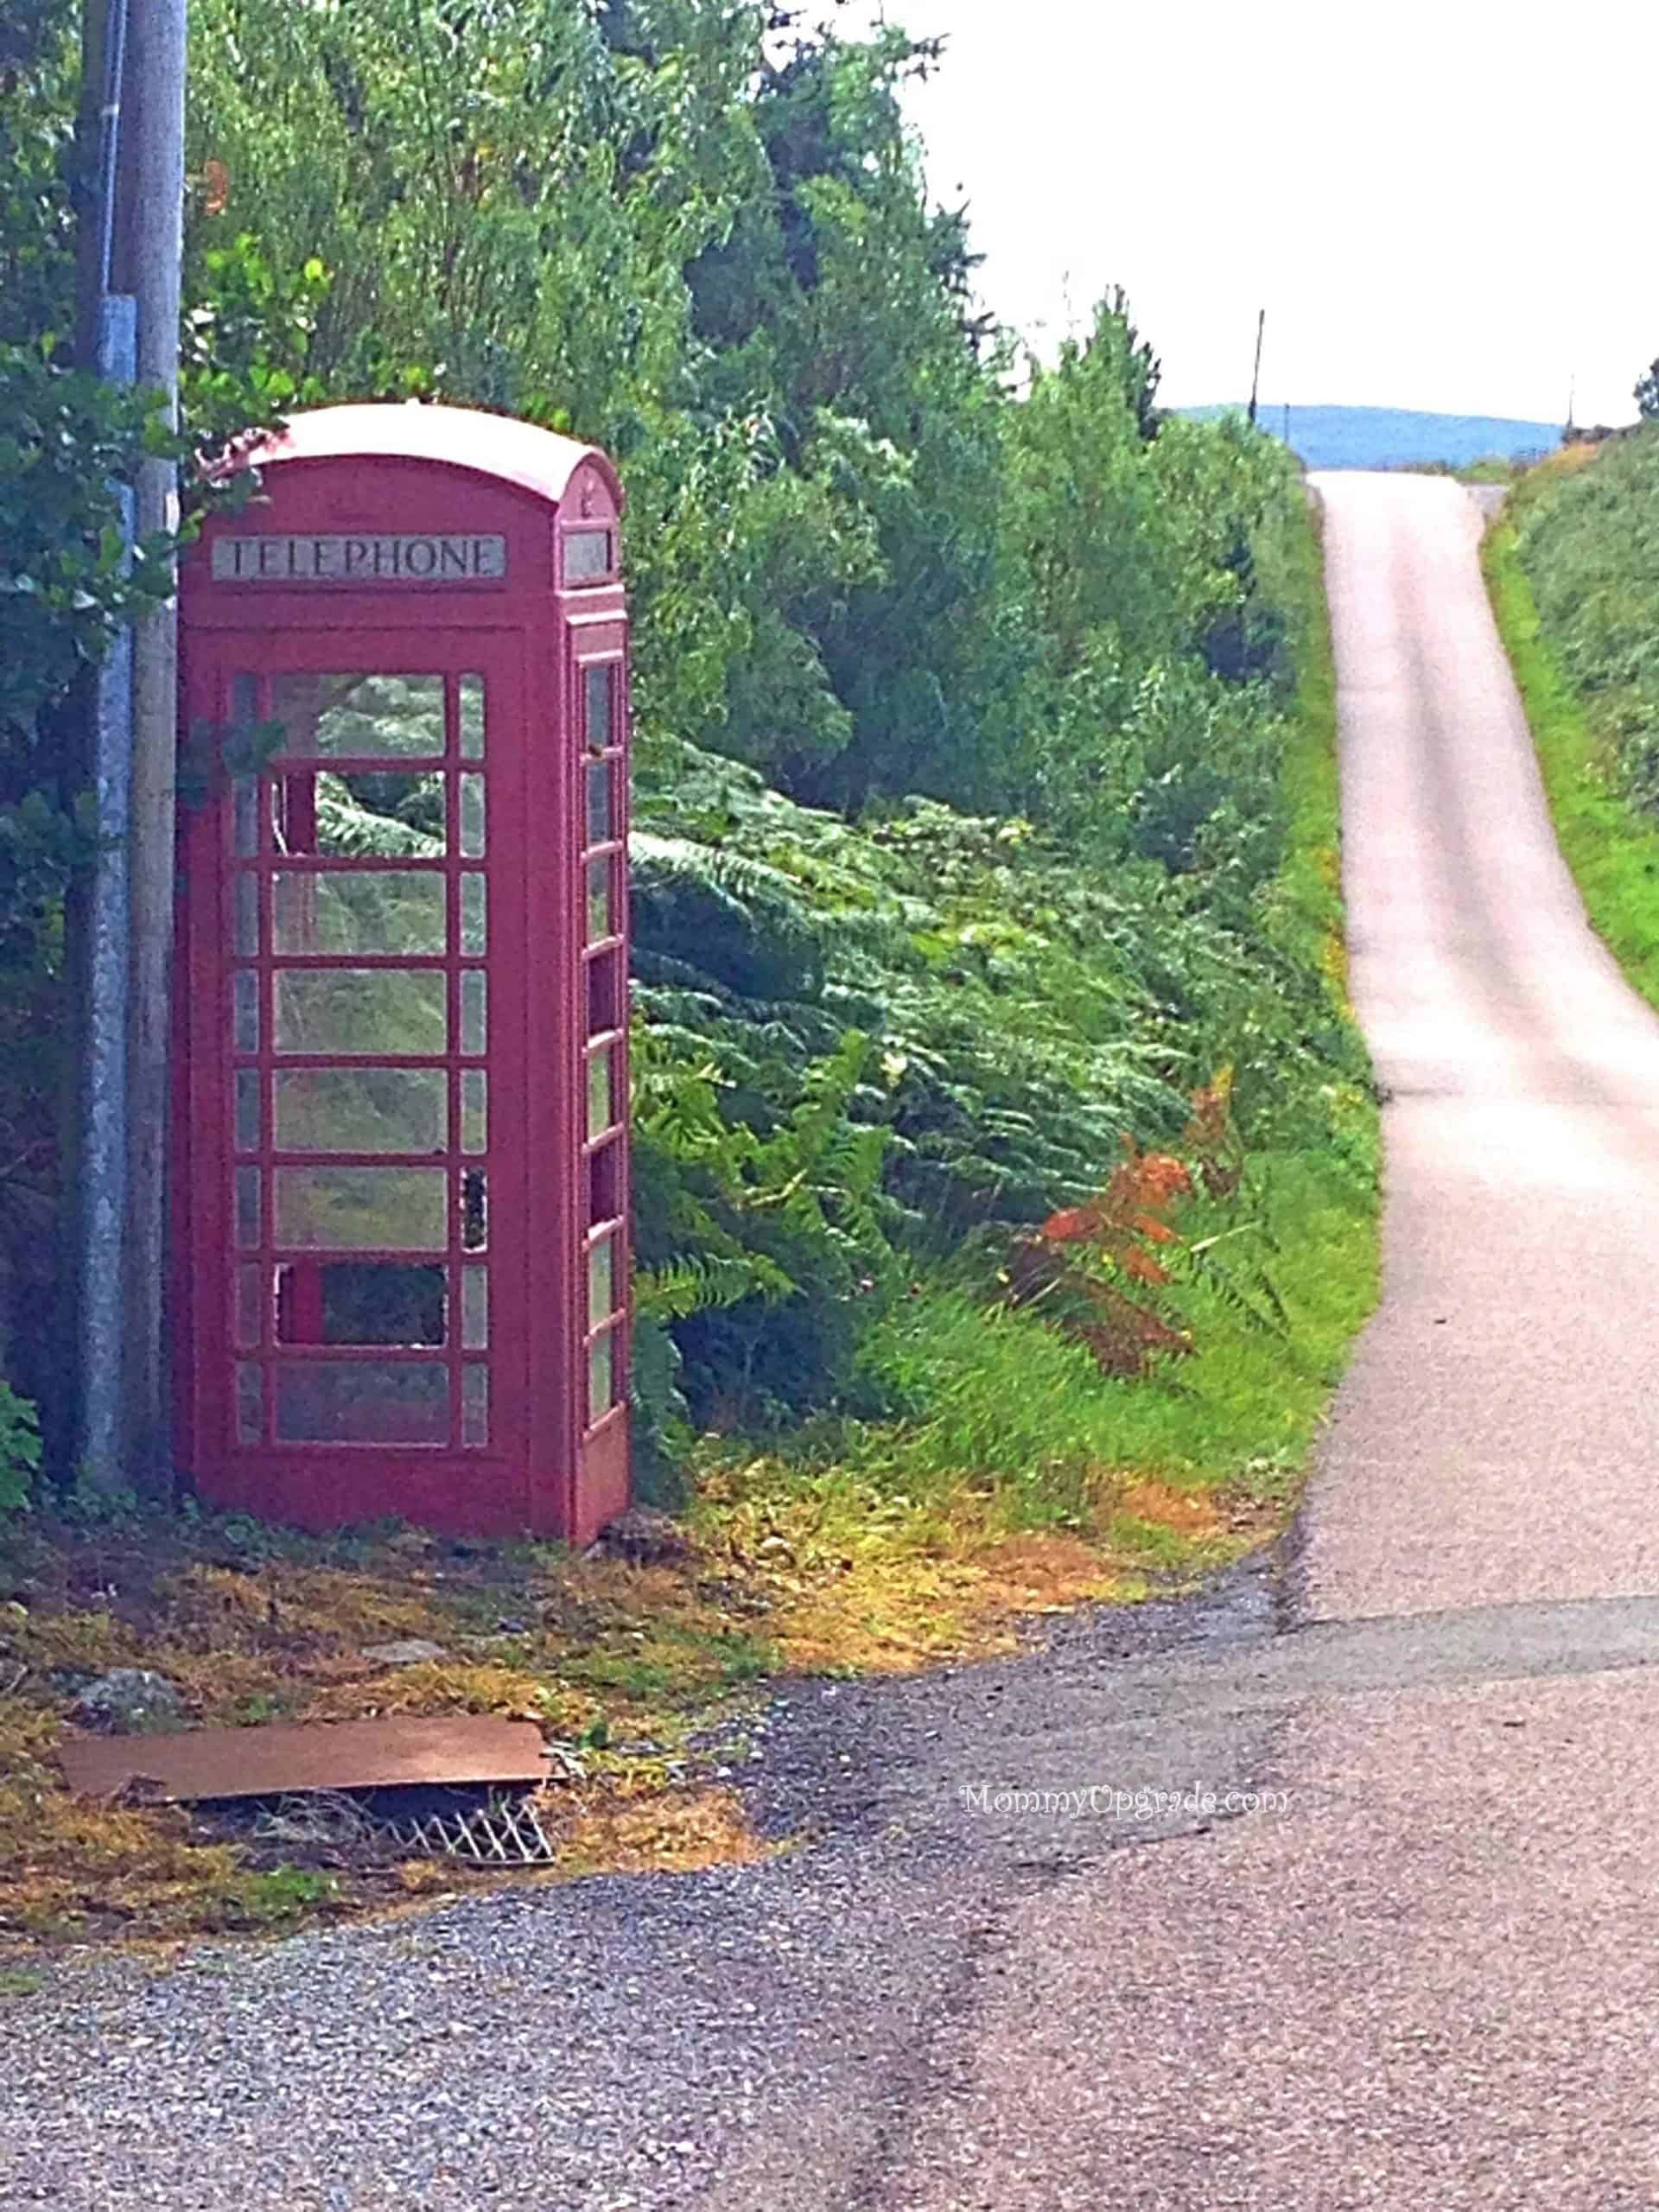 phone booth on Islay, Scotland